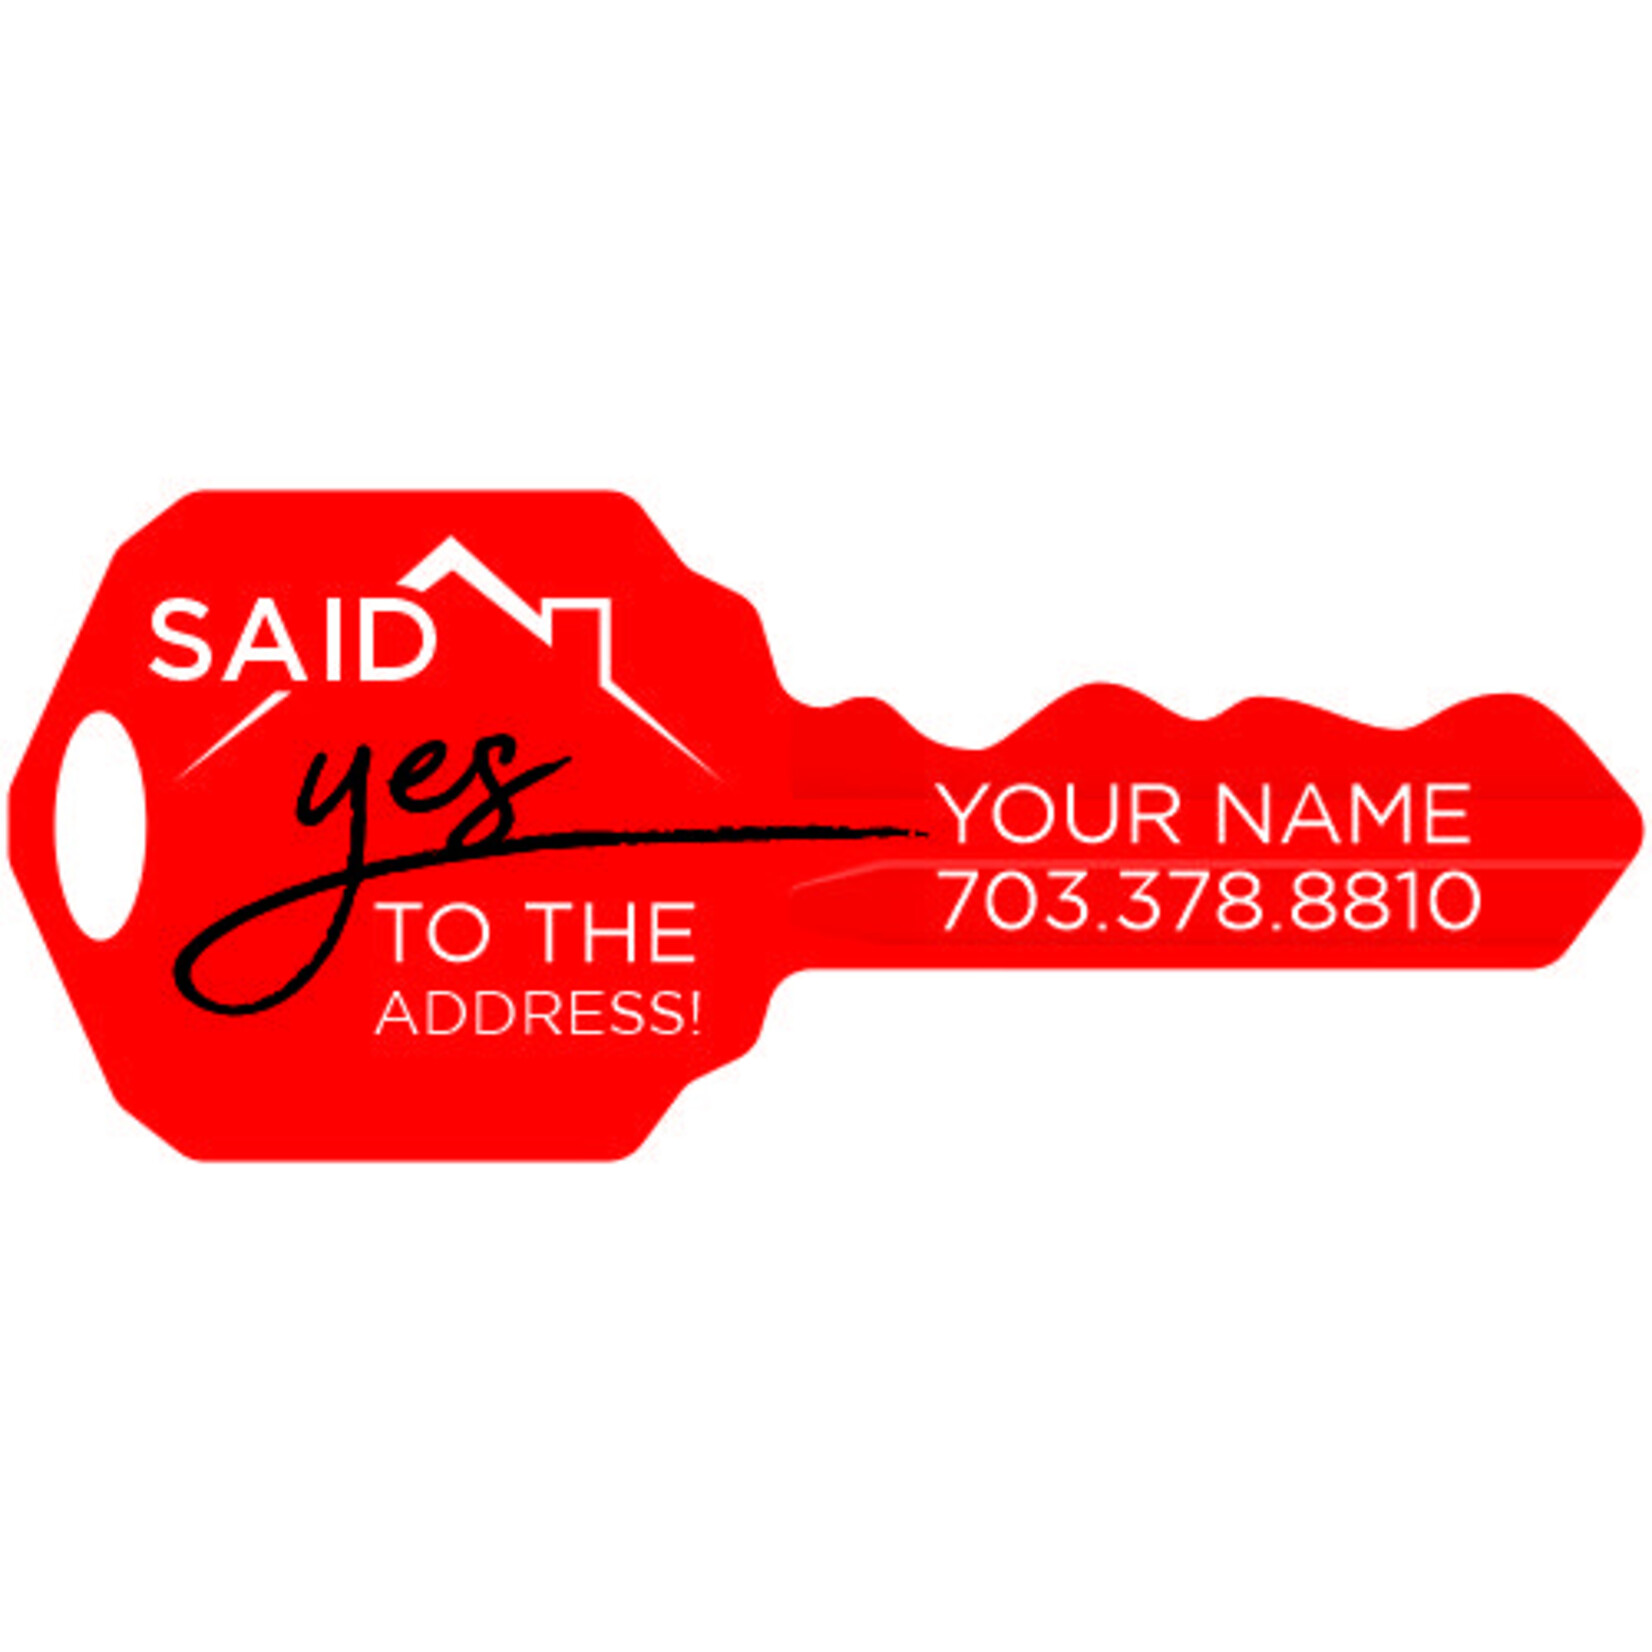 Said Yes To The Address - PVC Key